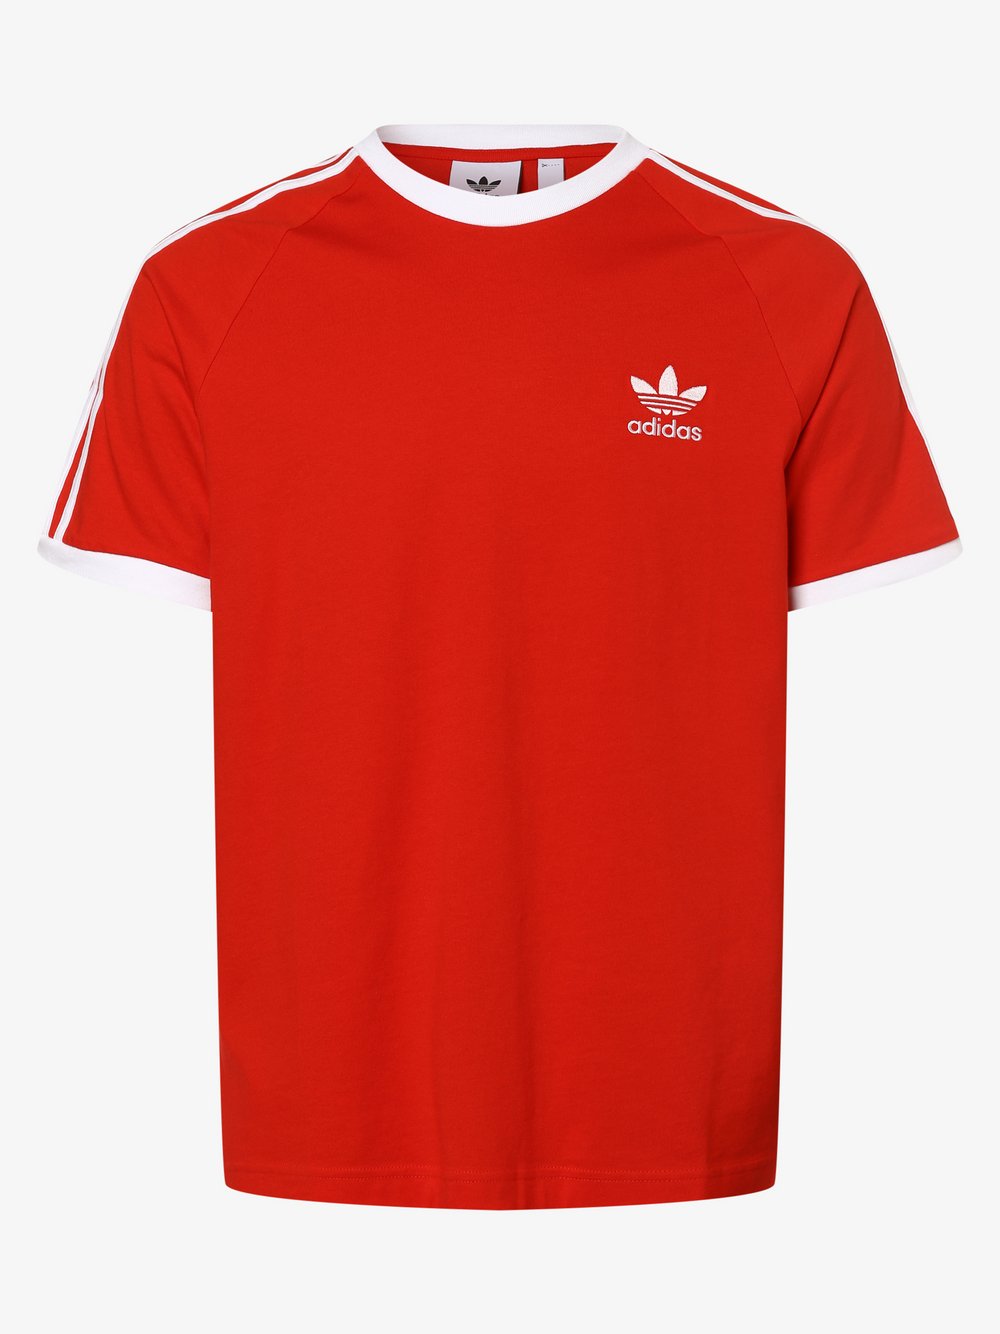 Adidas Originals - T-shirt męski, czerwony